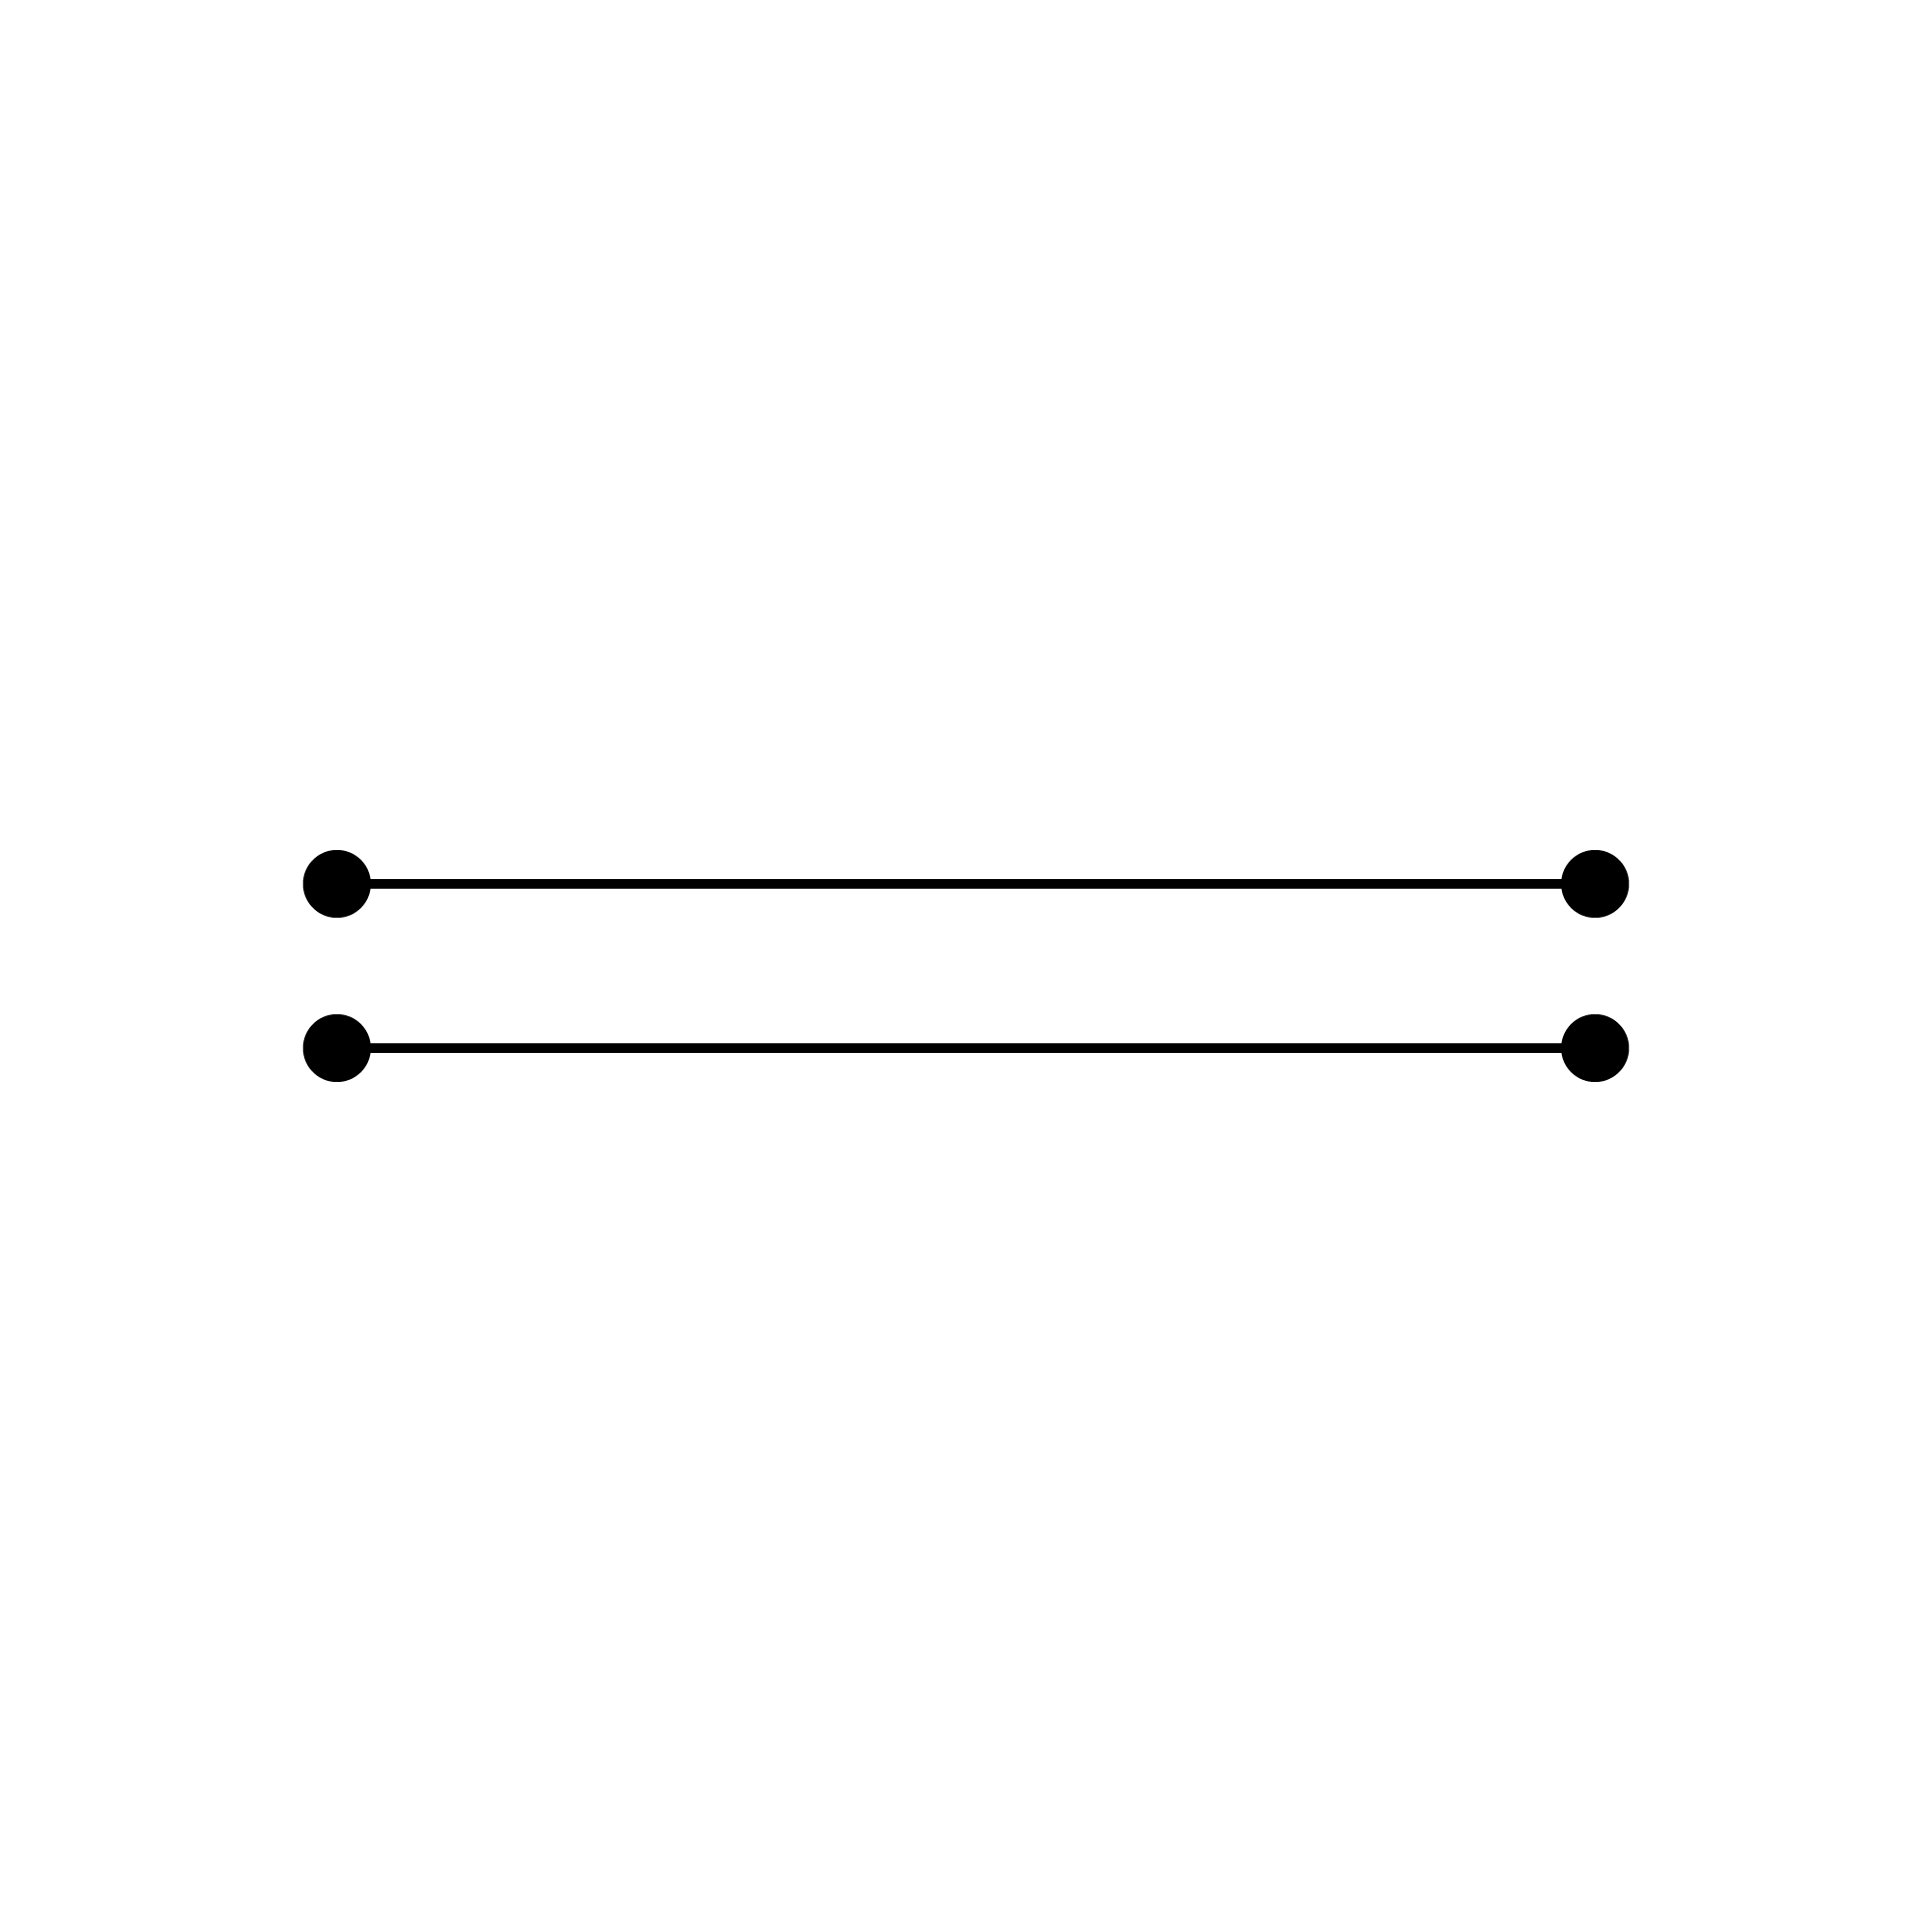 Parallel line segments